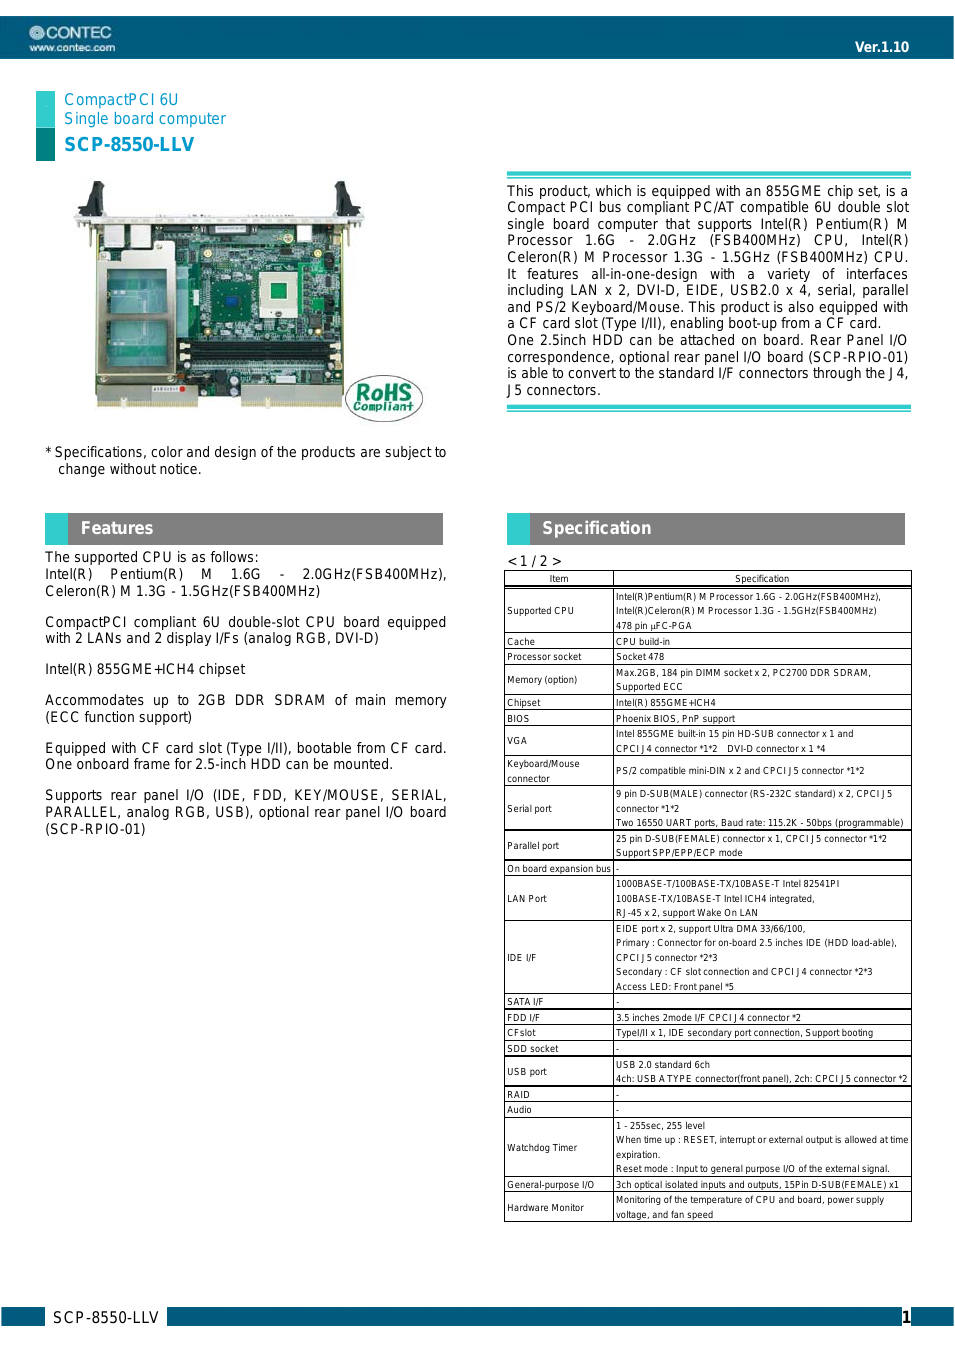 CompactPCI Single board Computer SCP-8550-LLV